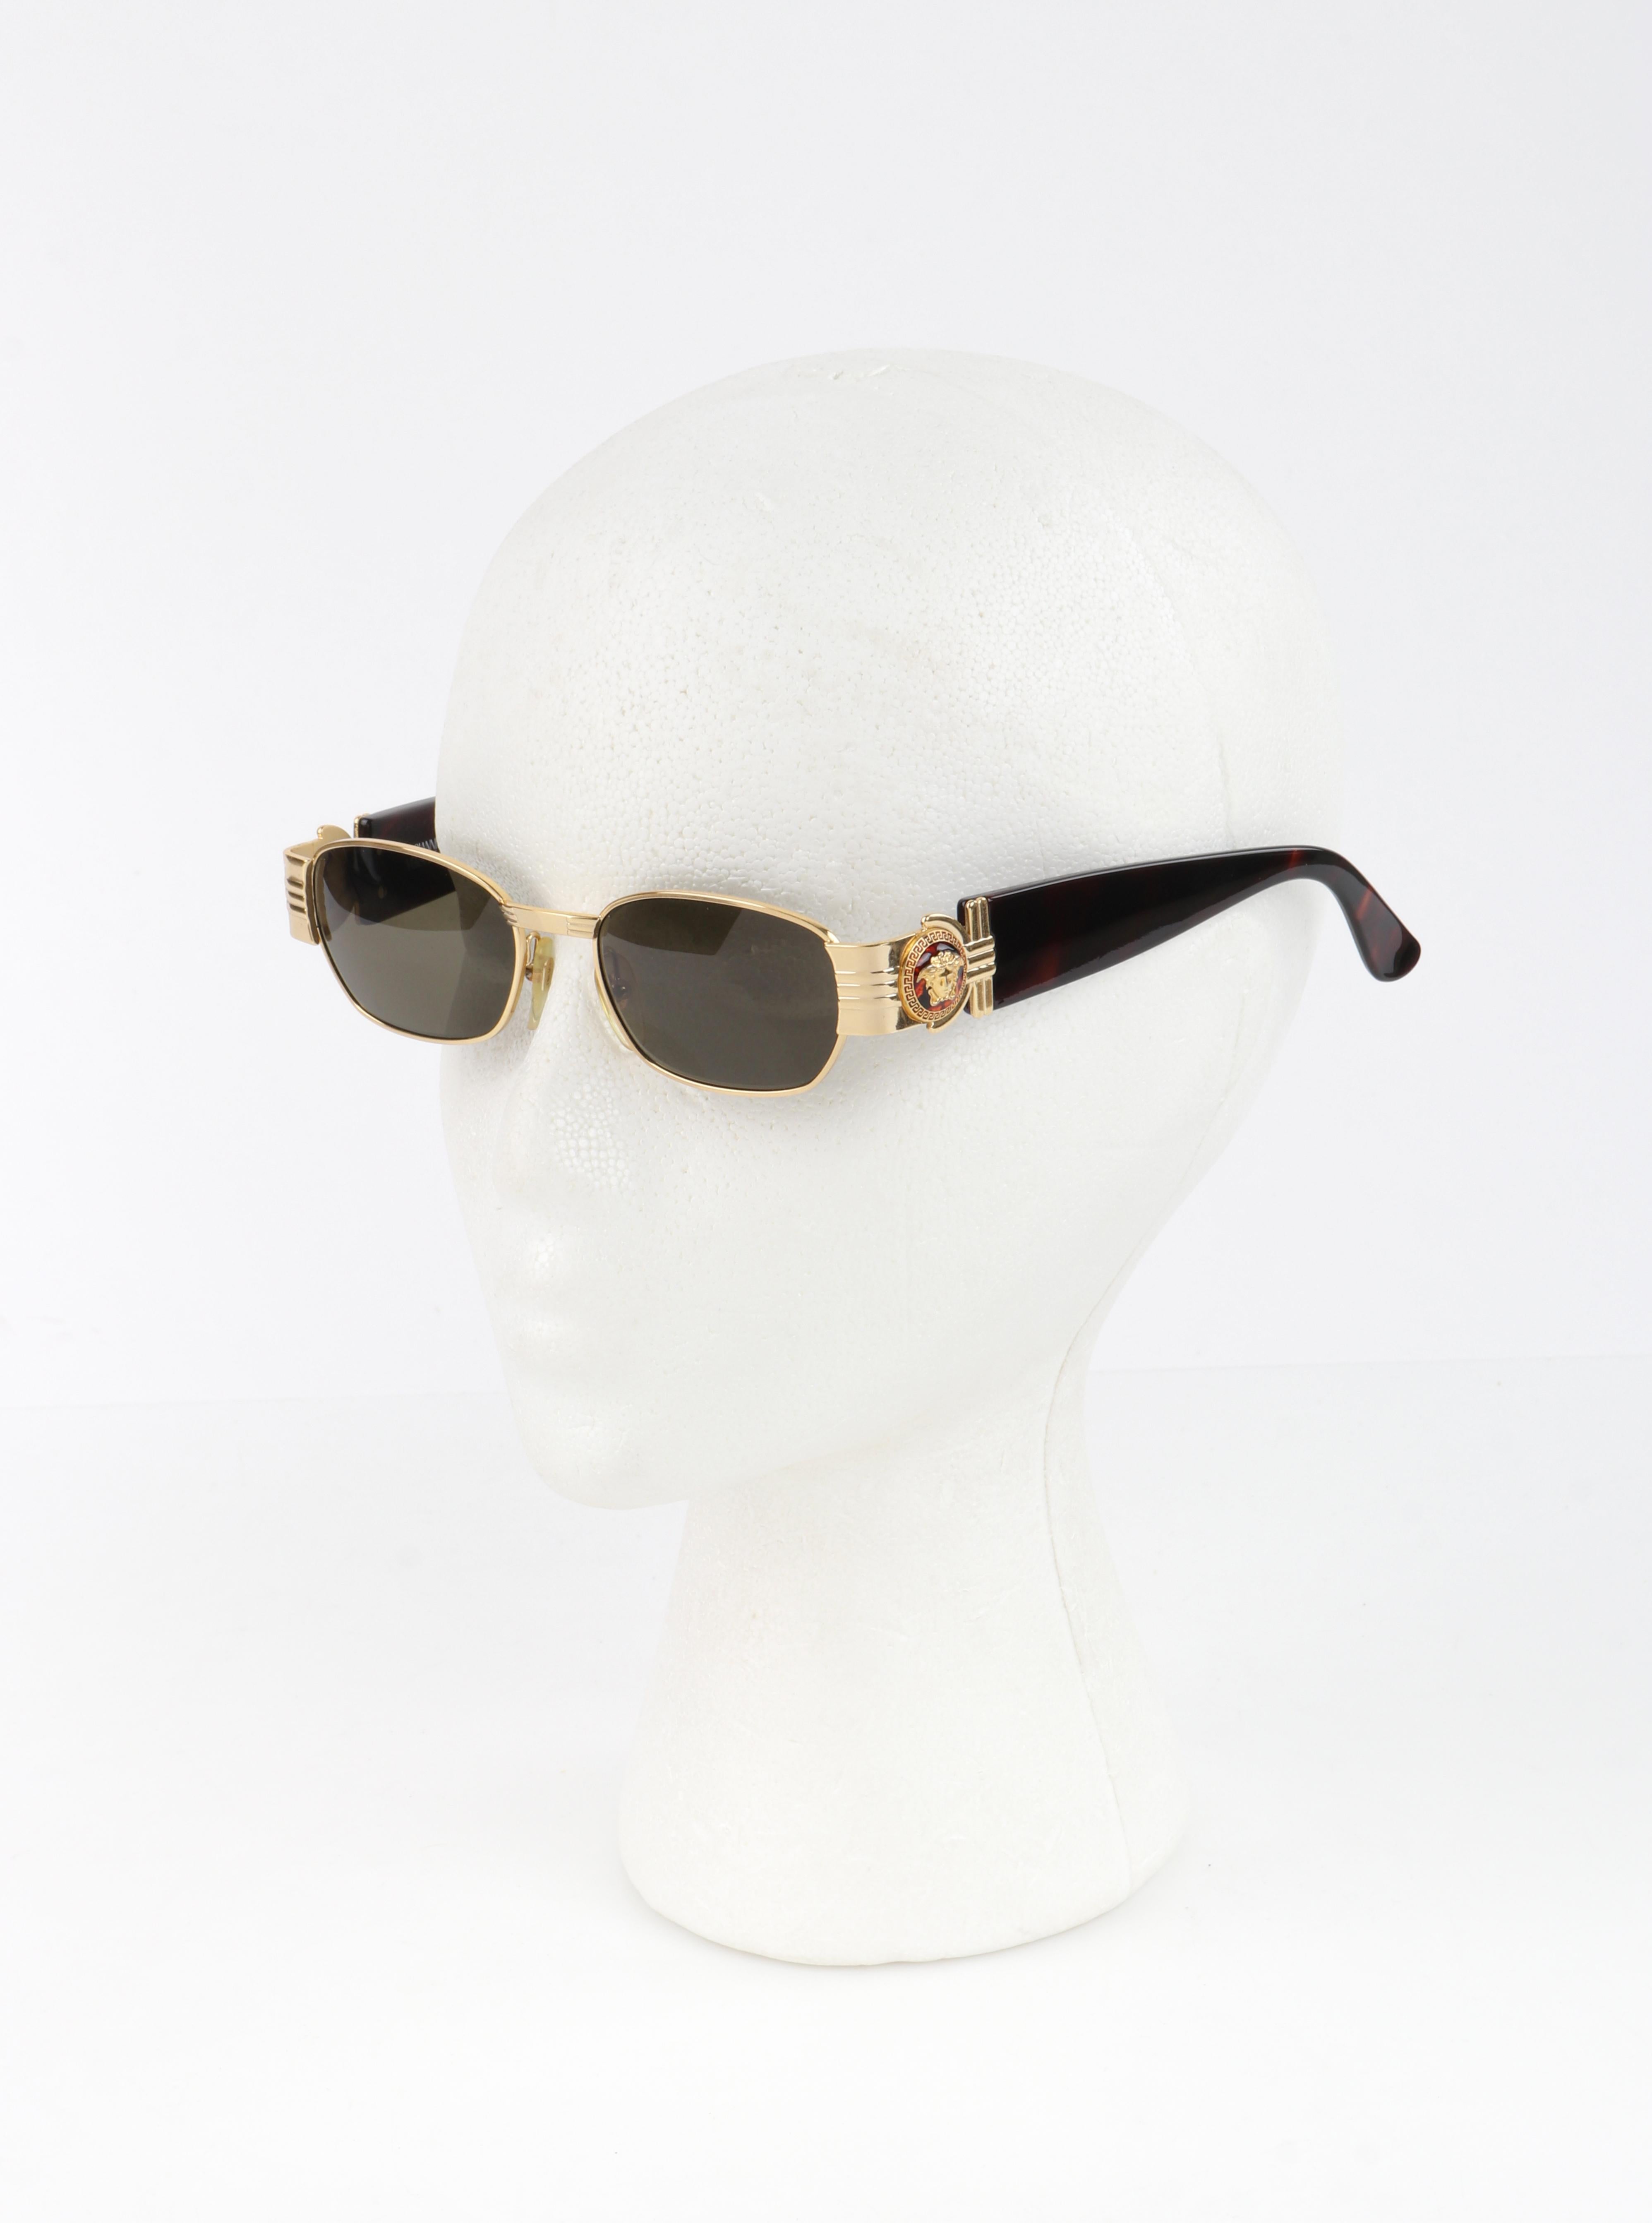 GIANNI VERSACE c.1990s Gold Tortoiseshell Medusa Emblem Oval Shaped Sunglasses For Sale 4